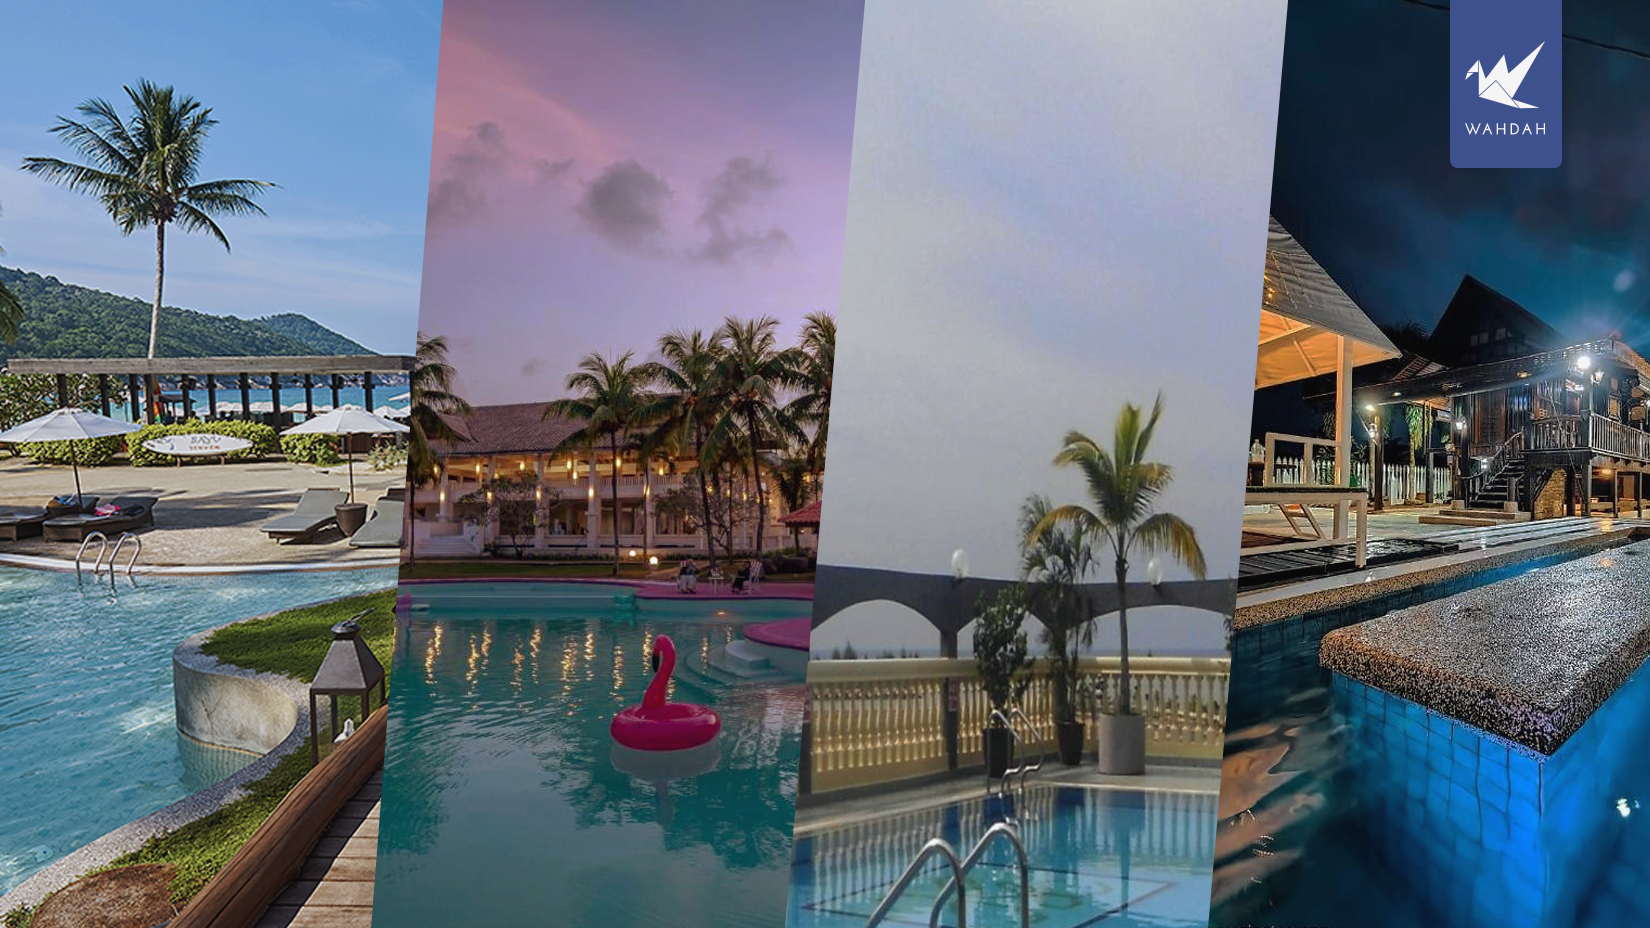 Top 7 Terengganu's Beach Resorts and Hotels